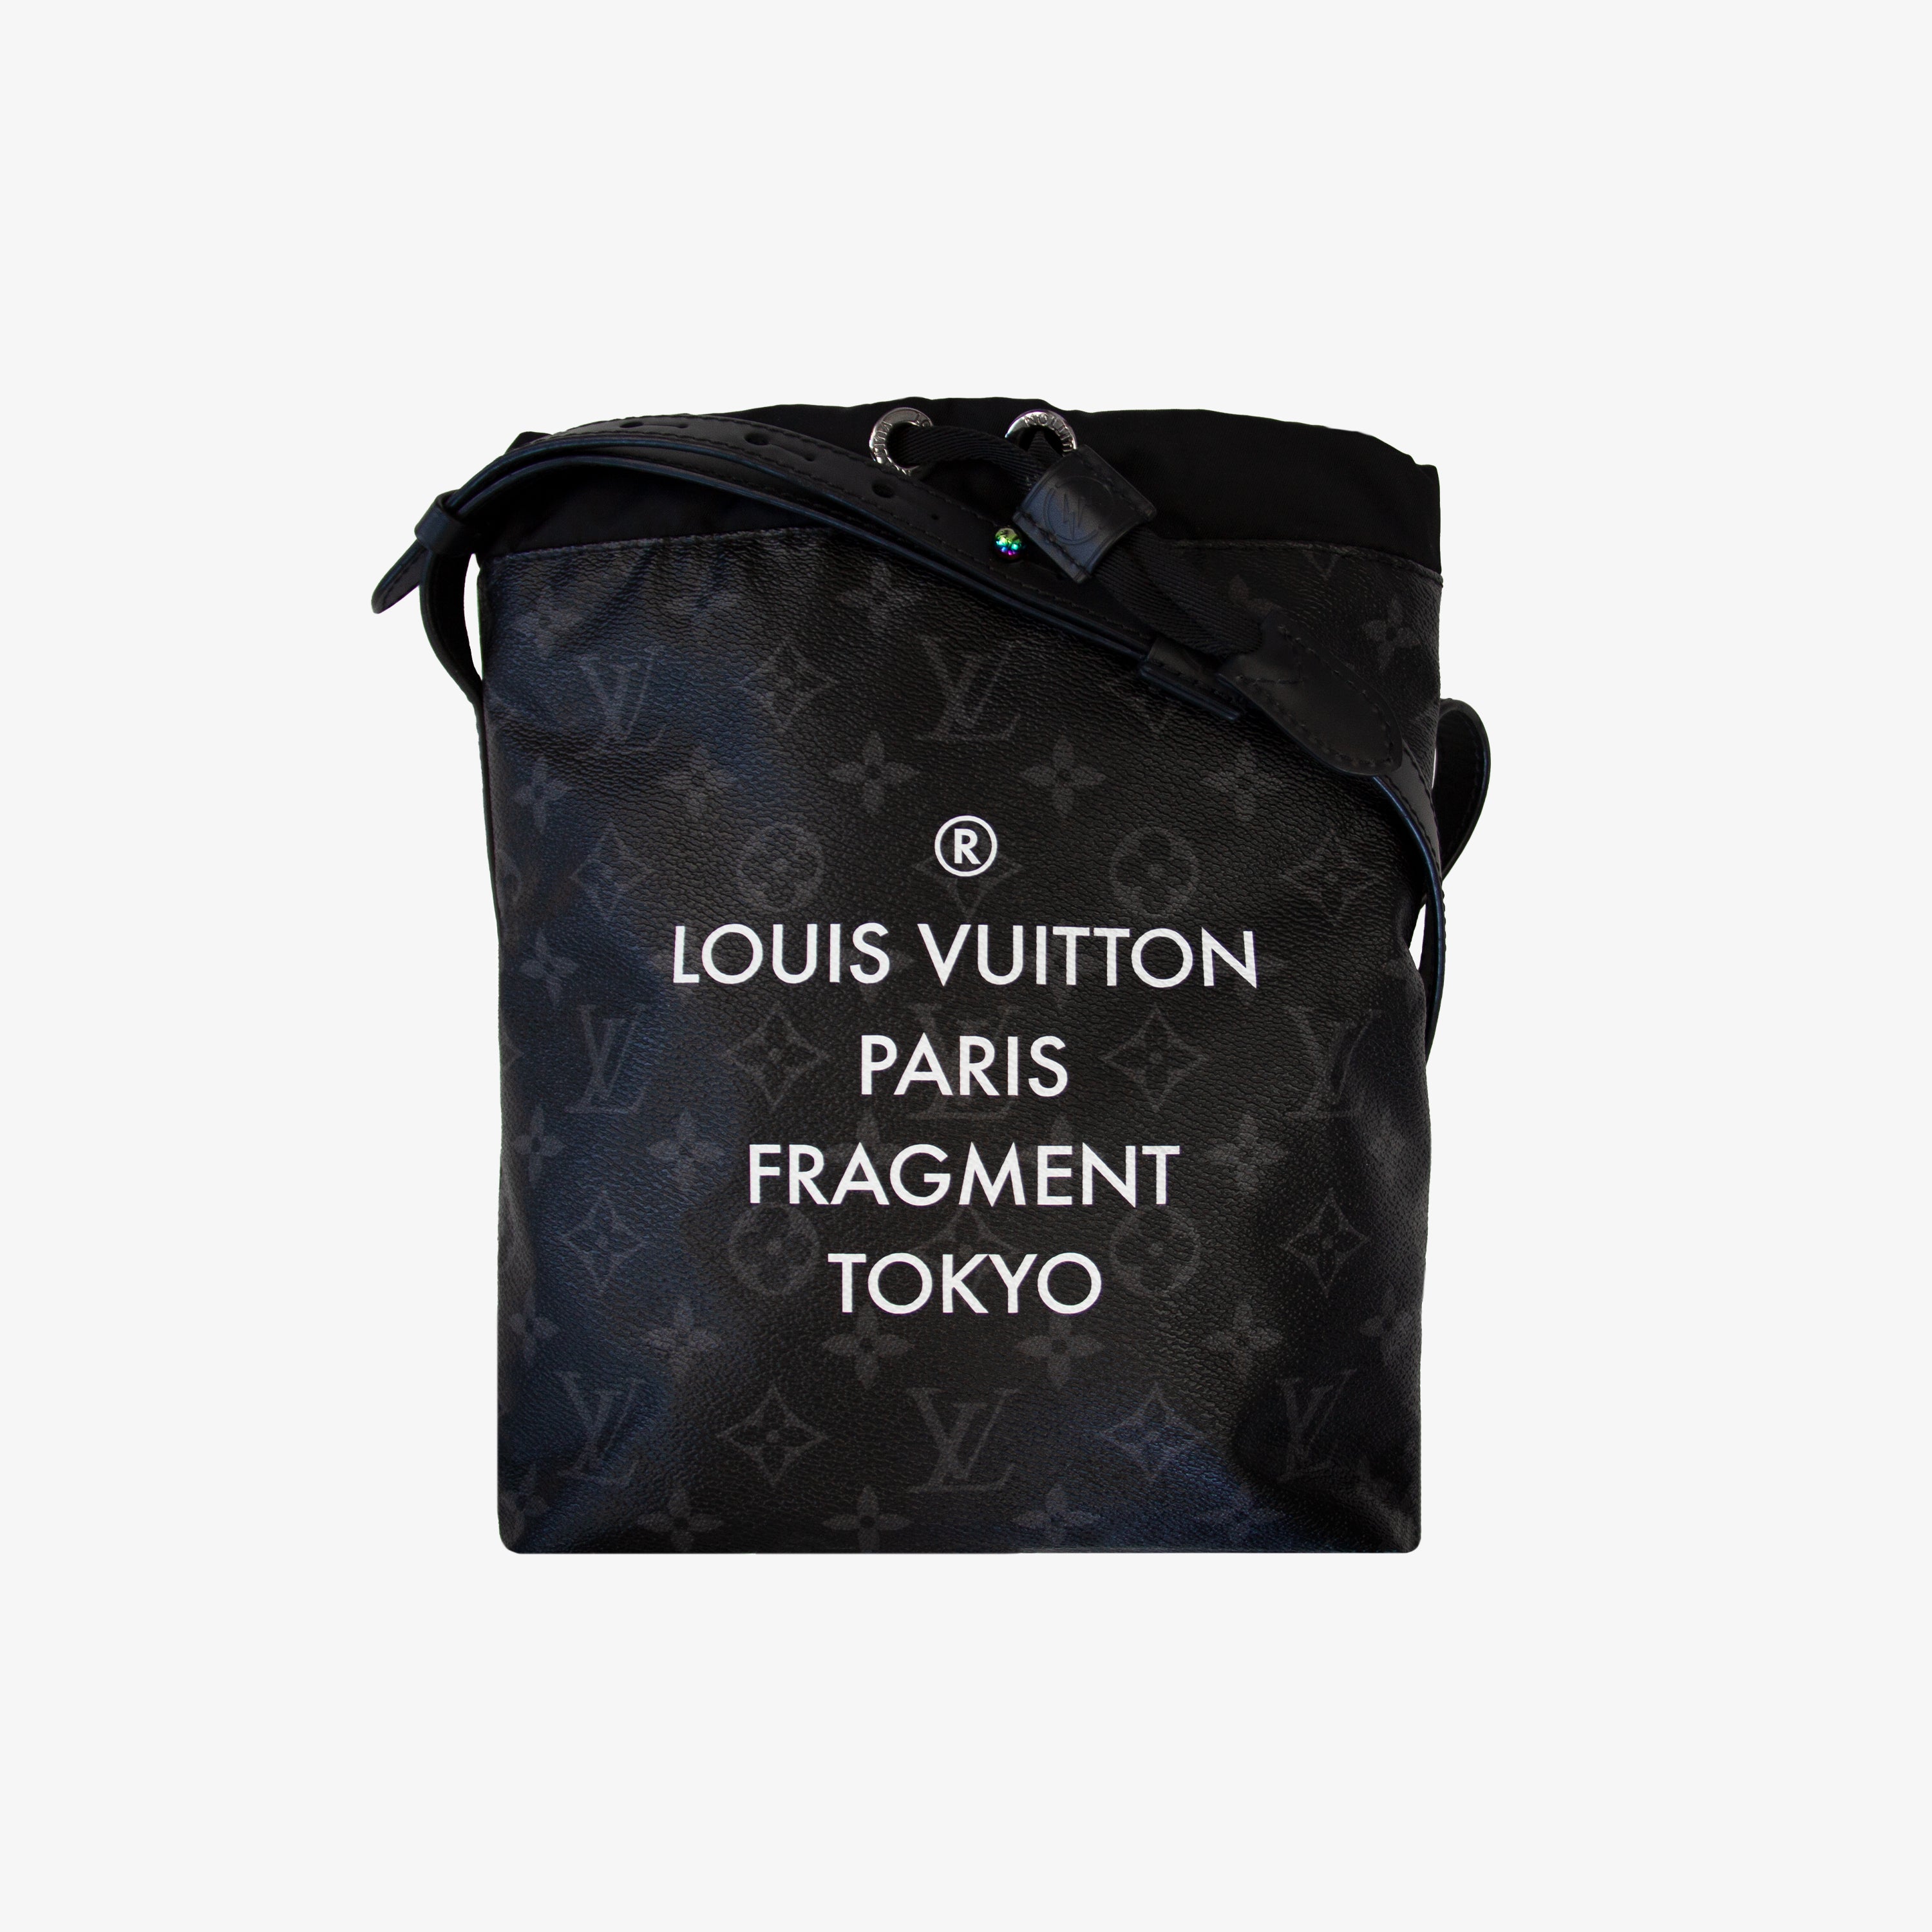 Fragment Design x Louis Vuitton Collection